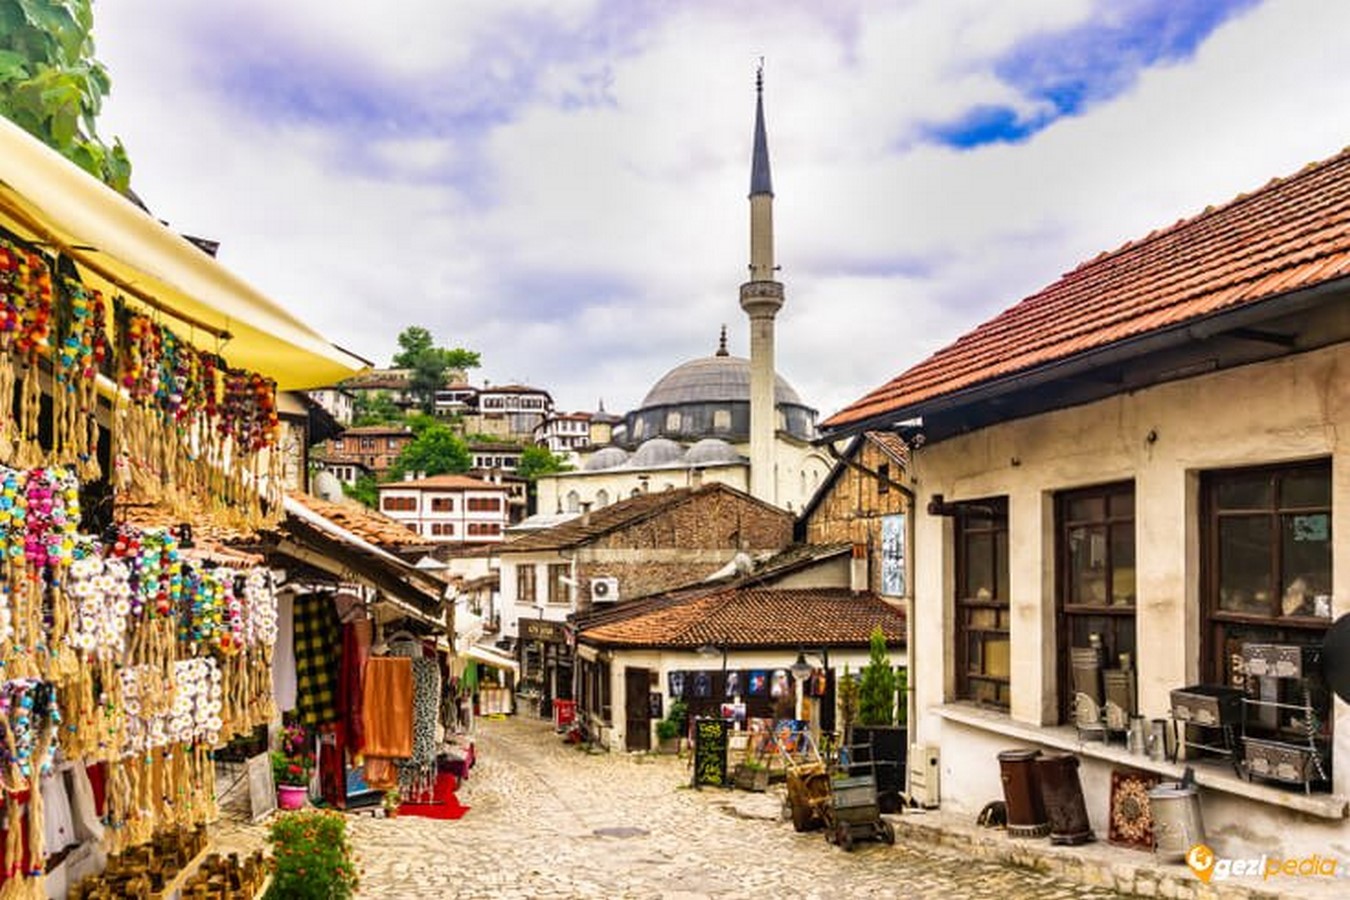 Walking through the streets of Turkey - SHeet3